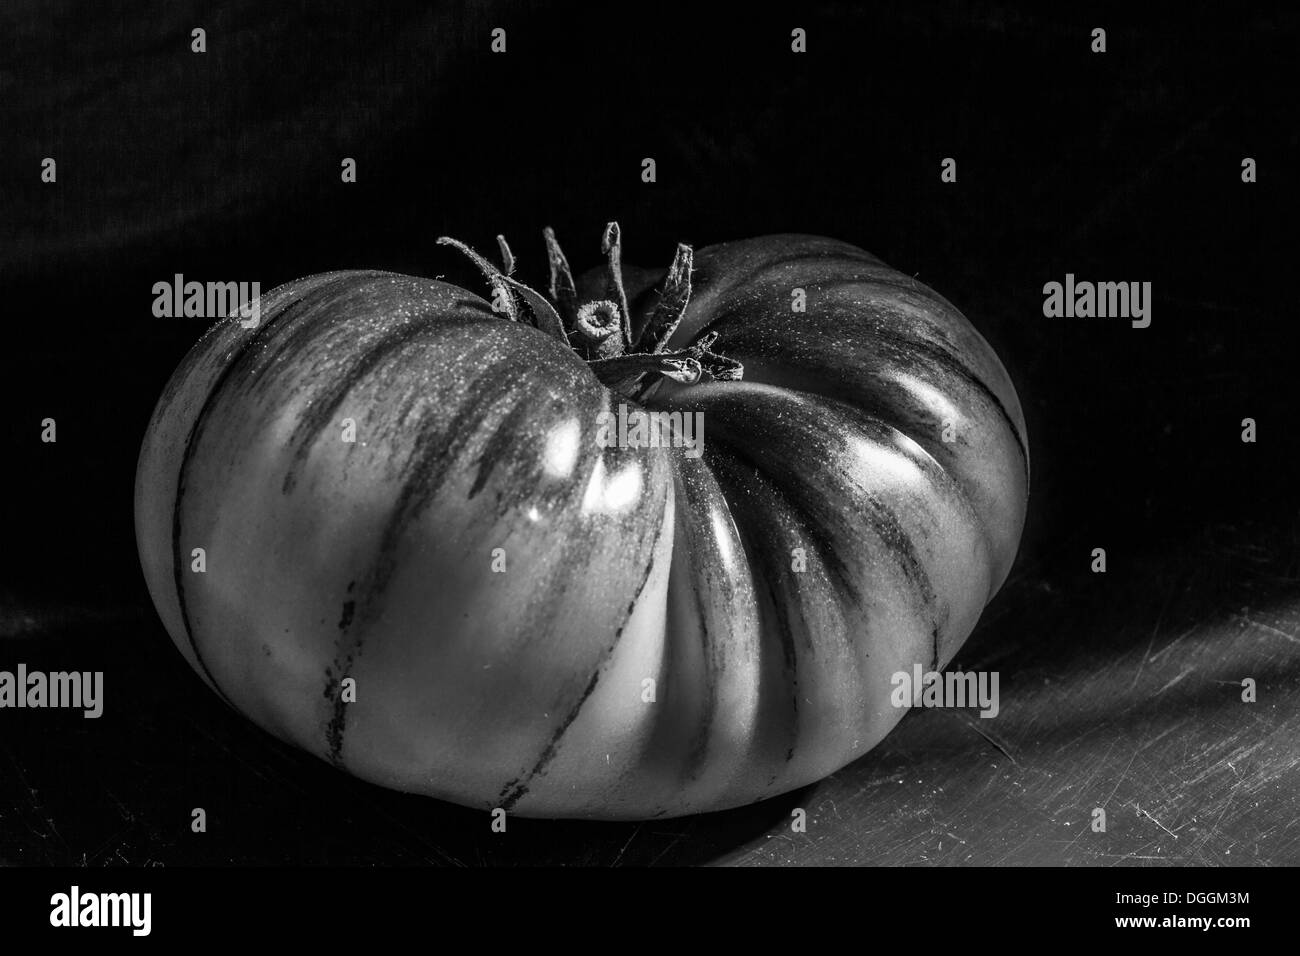 Marmande tomato shot in an Edward Weston style. Stock Photo